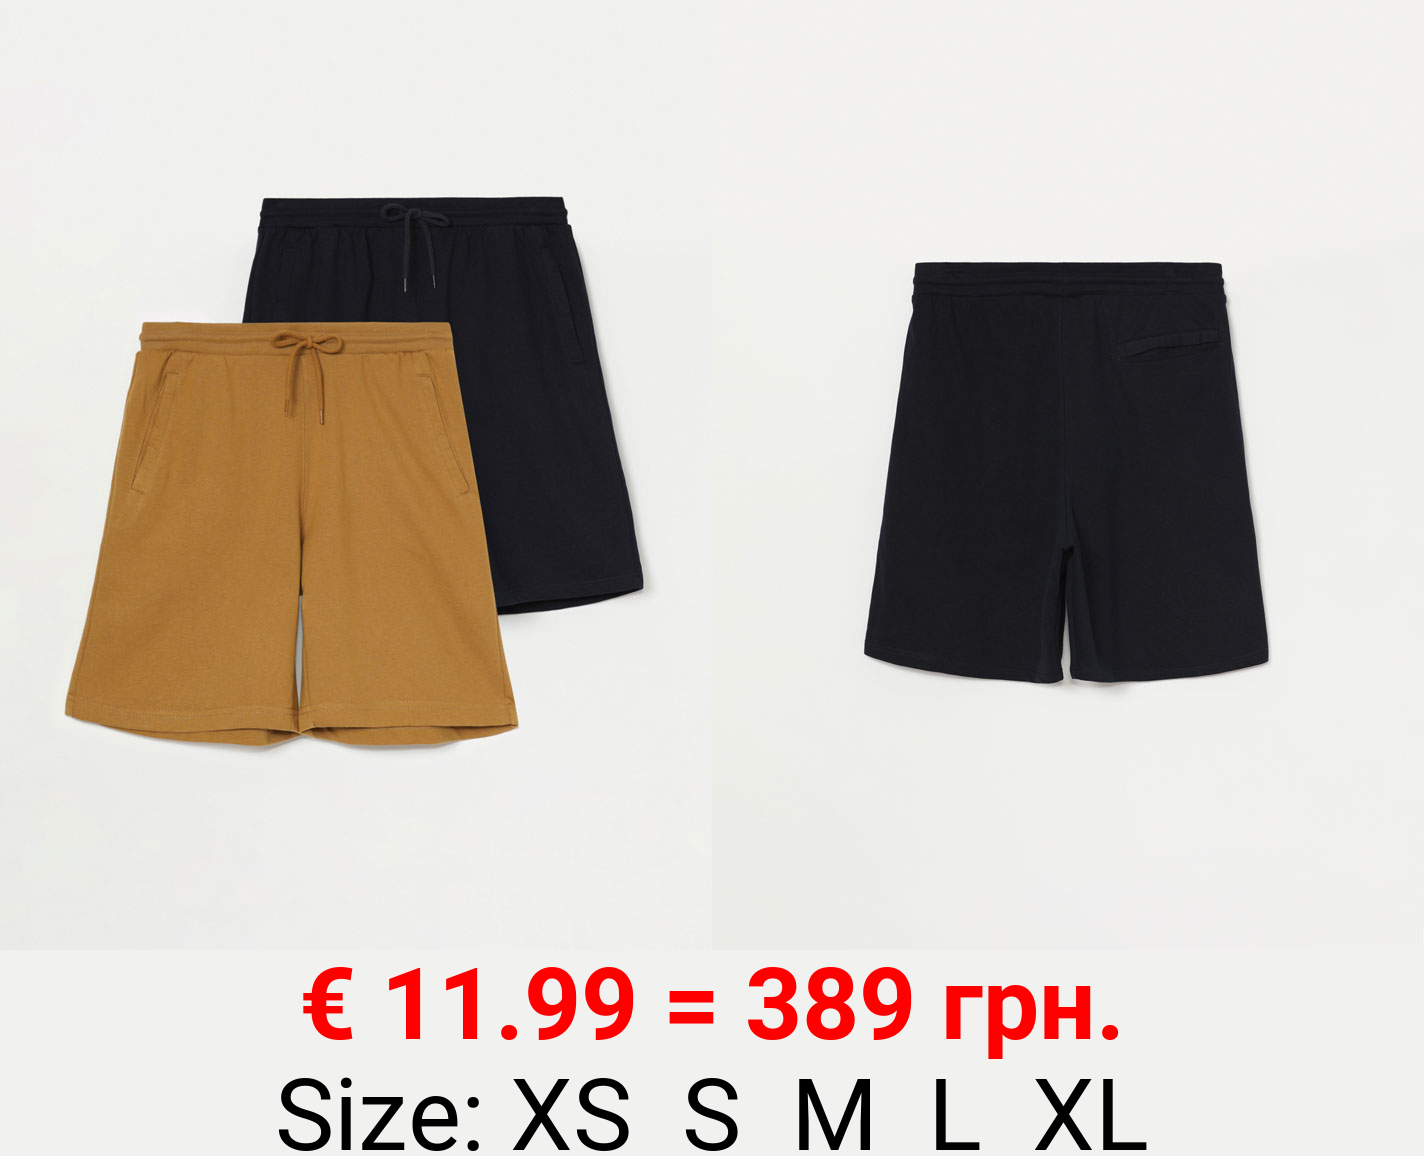 Pack of 2 pairs of basic jogging Bermuda shorts